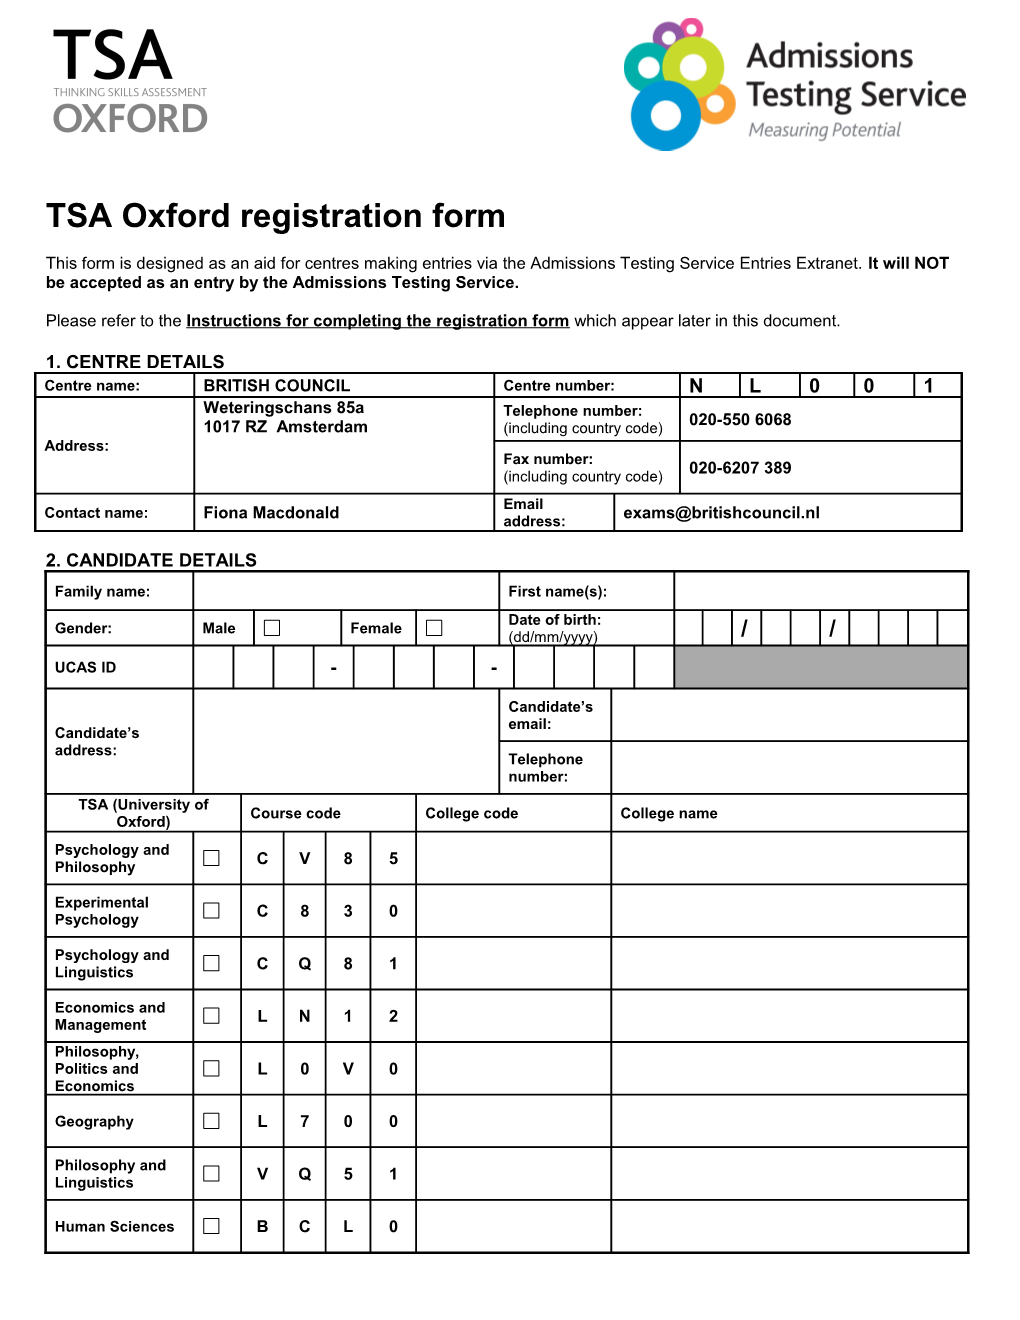 TSA Oxford Registration Form